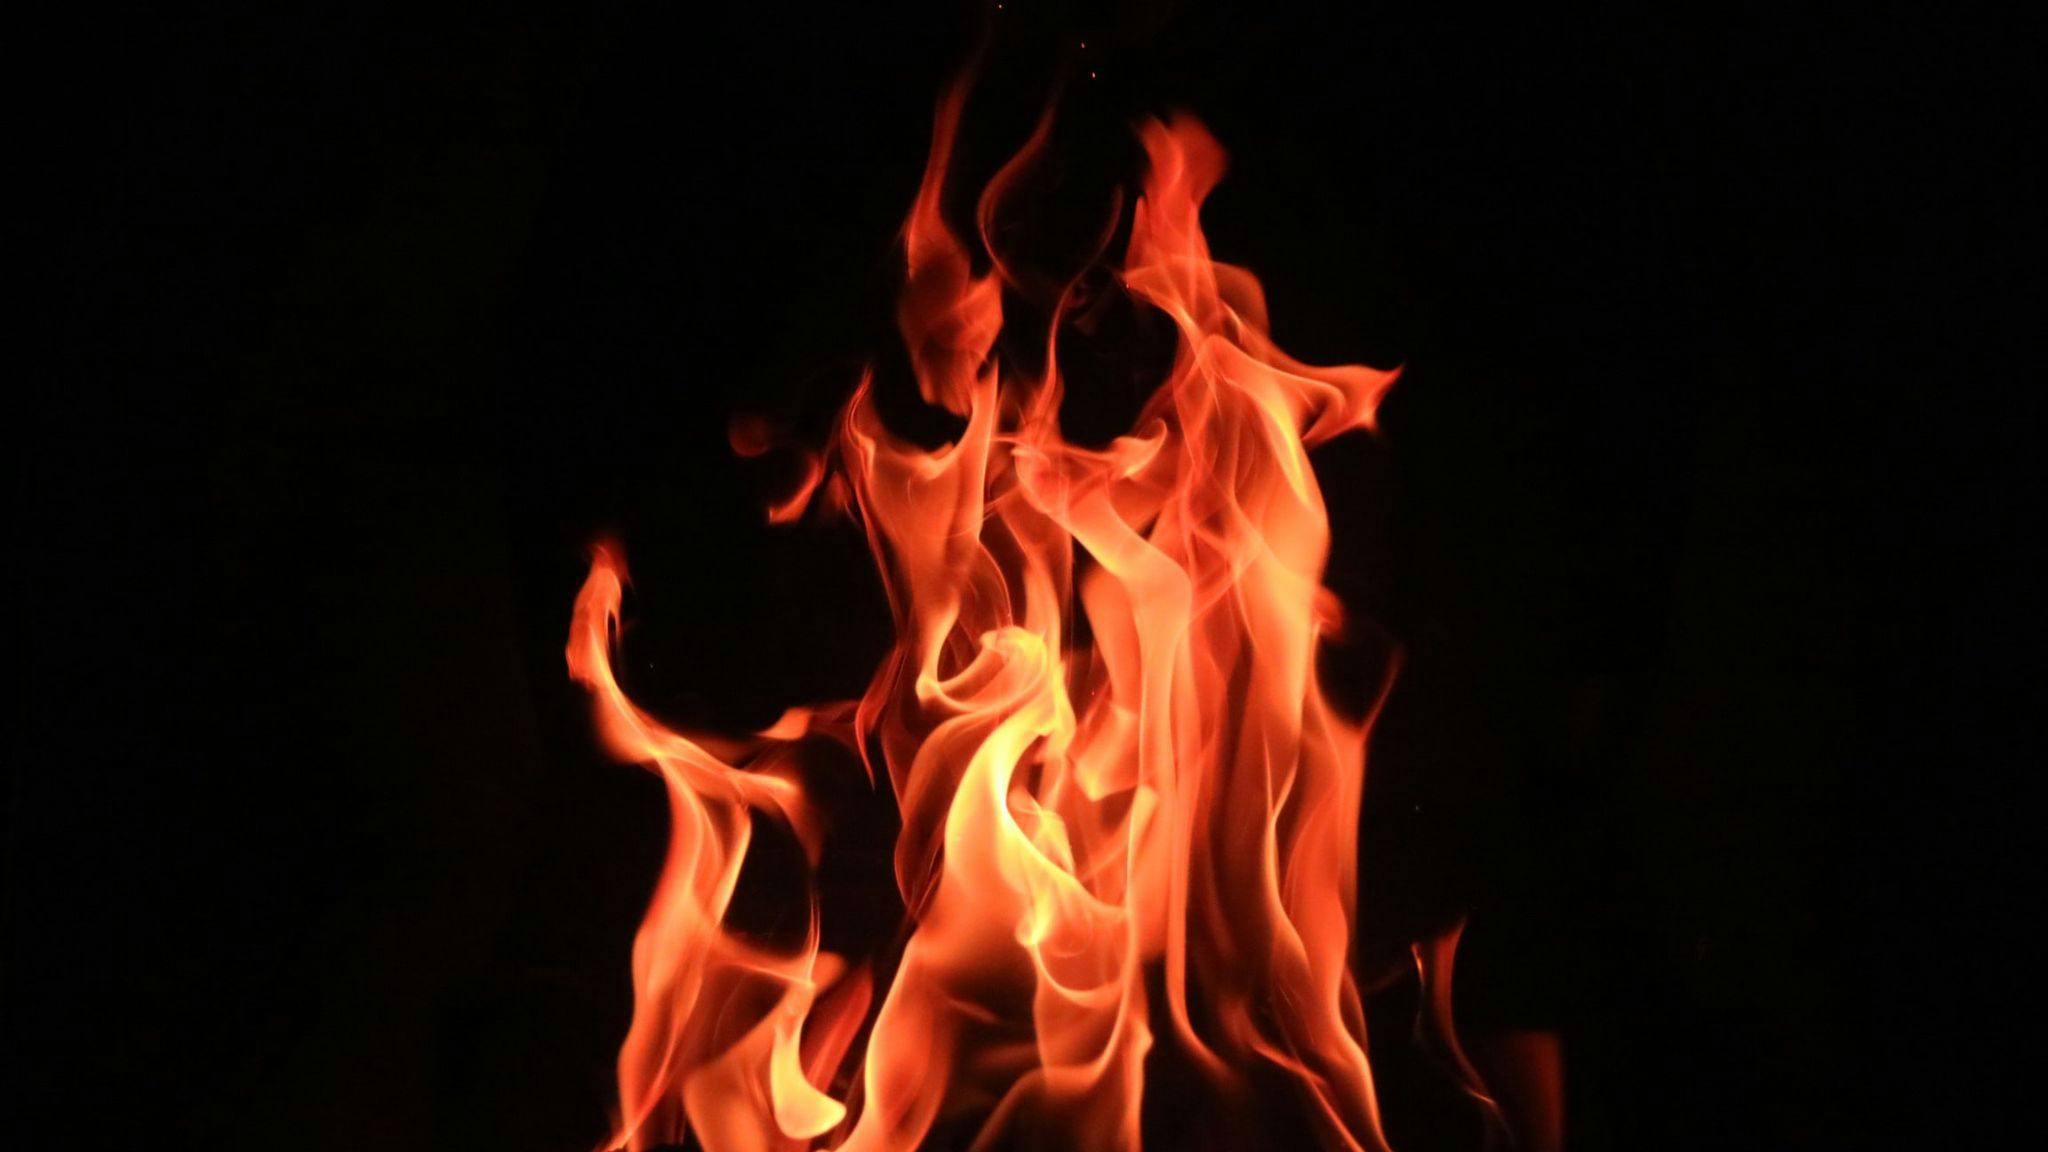 Fire - symbolic image